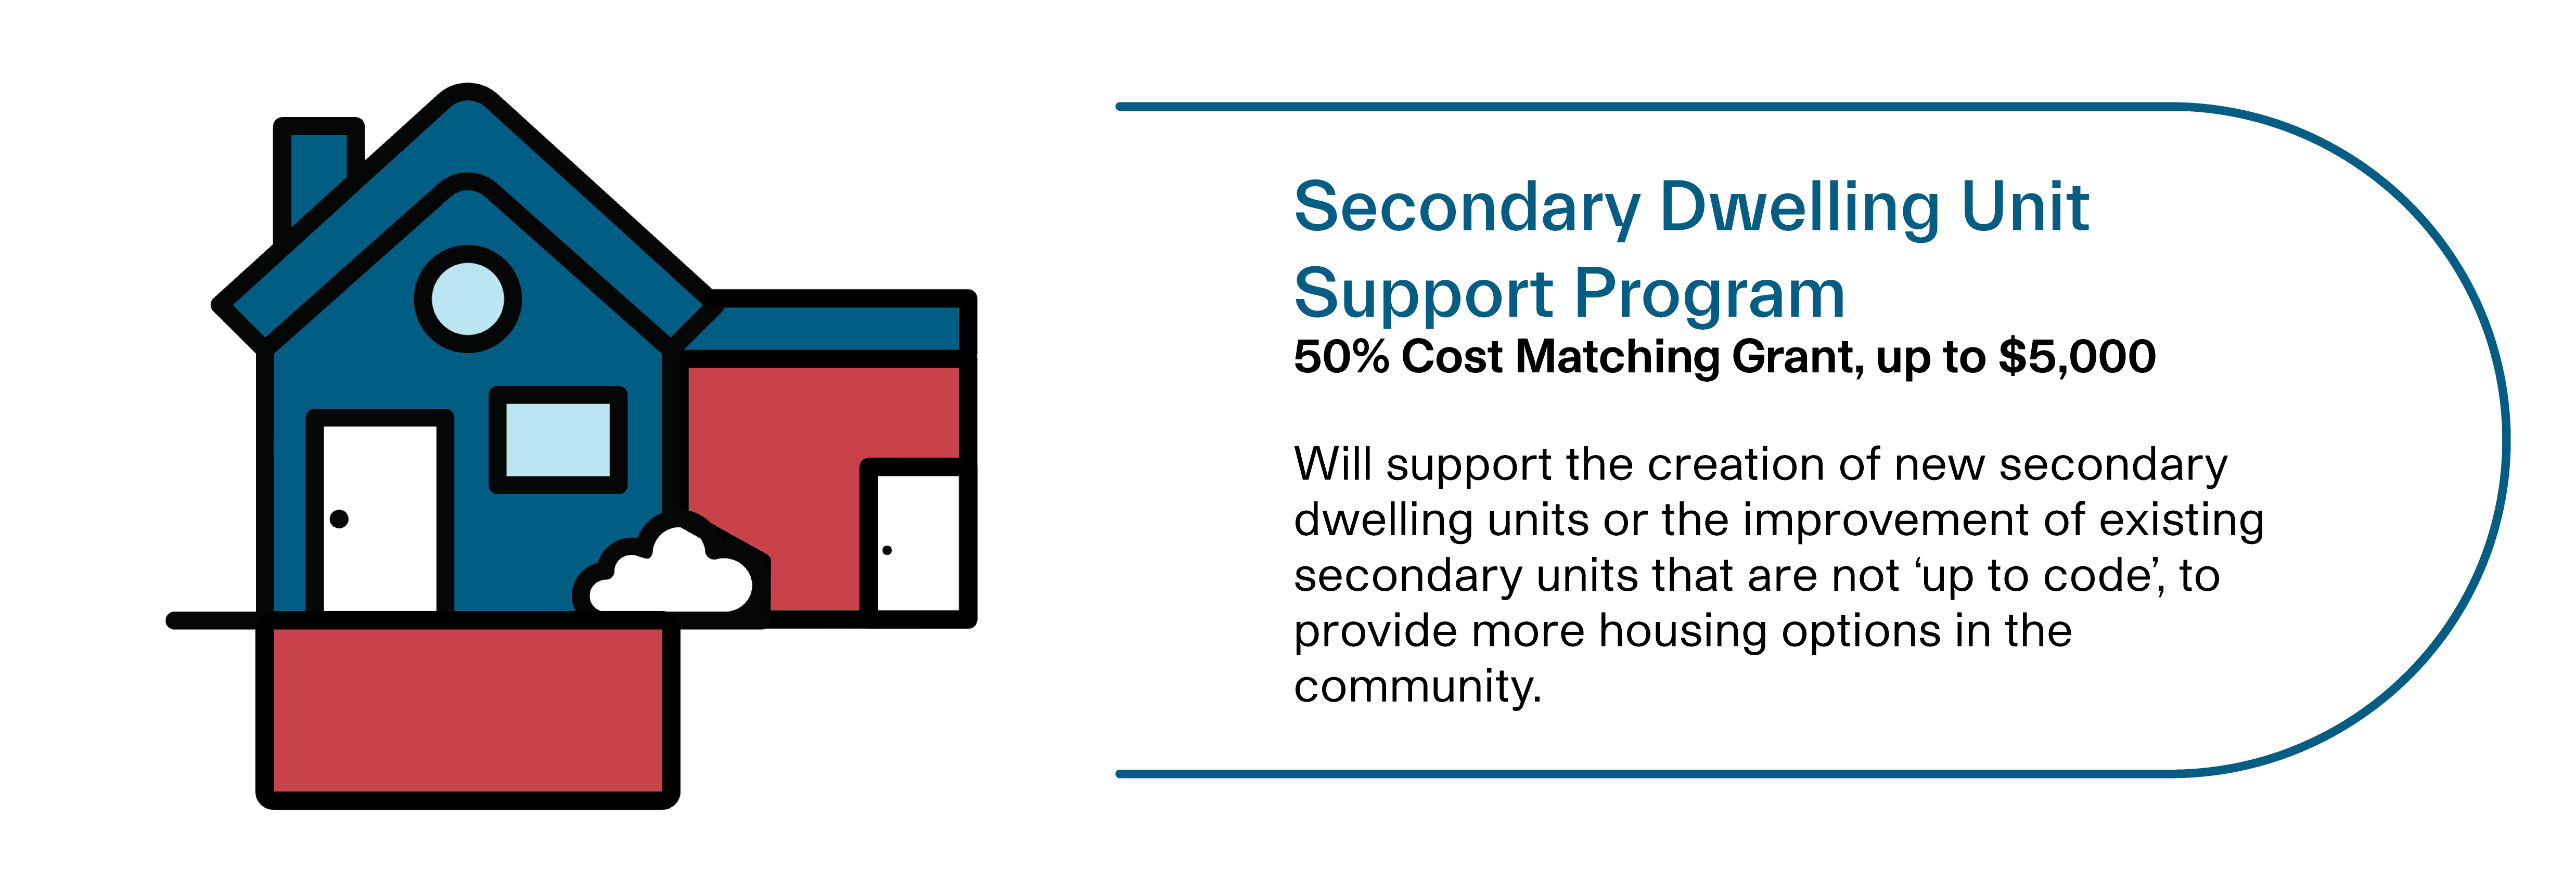 secondary dwelling unit support program